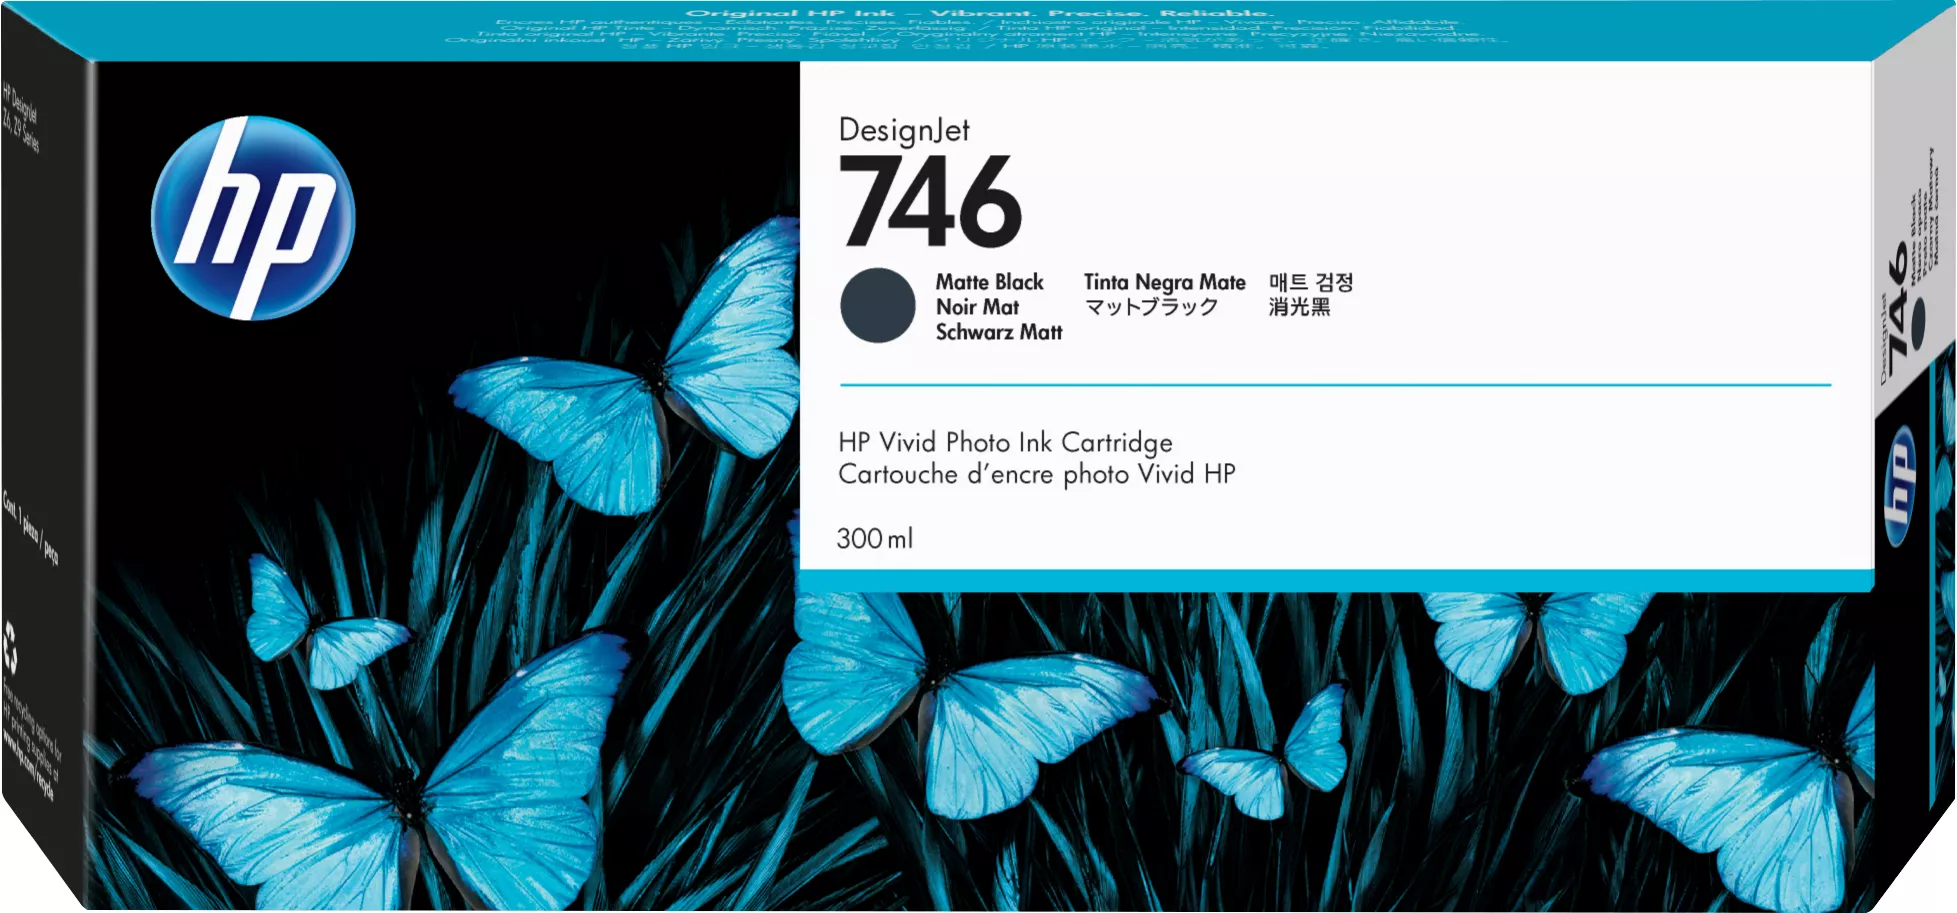 Vente HP 746 300-ml Matte Black Ink Cartridge HP au meilleur prix - visuel 2